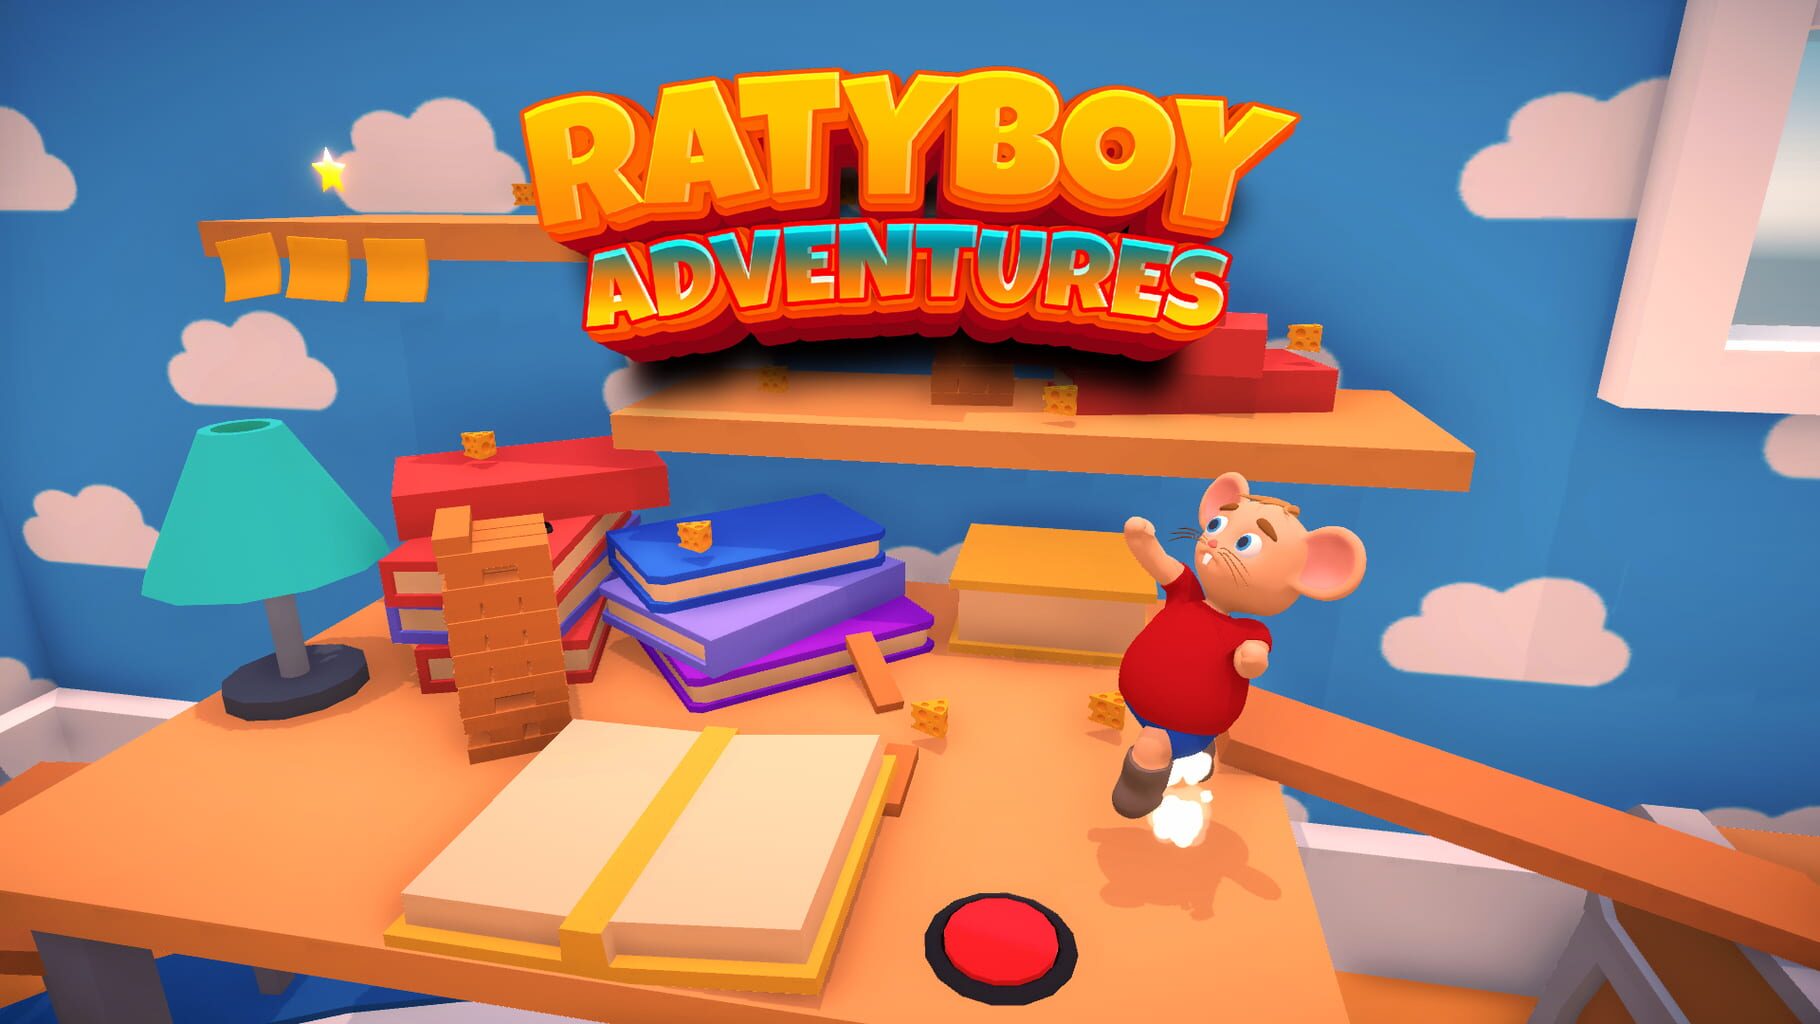 Arte - Ratyboy Adventures